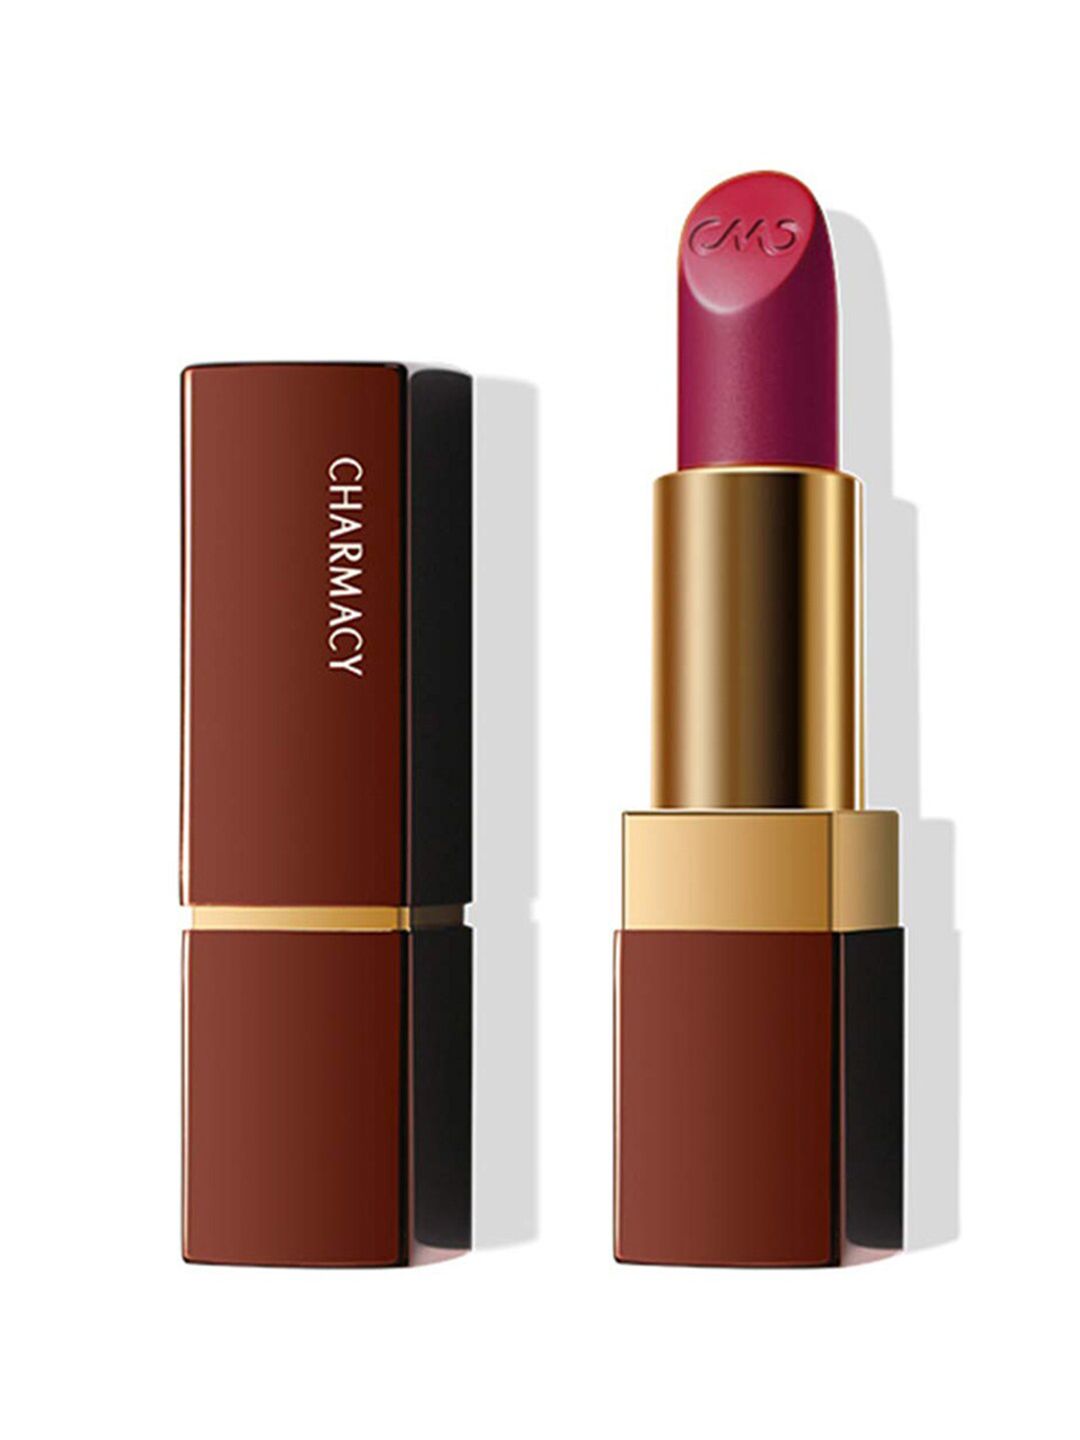 Charmacy Milano Soft Satin Matte Lipstick - Winter Sky 56 Price in India